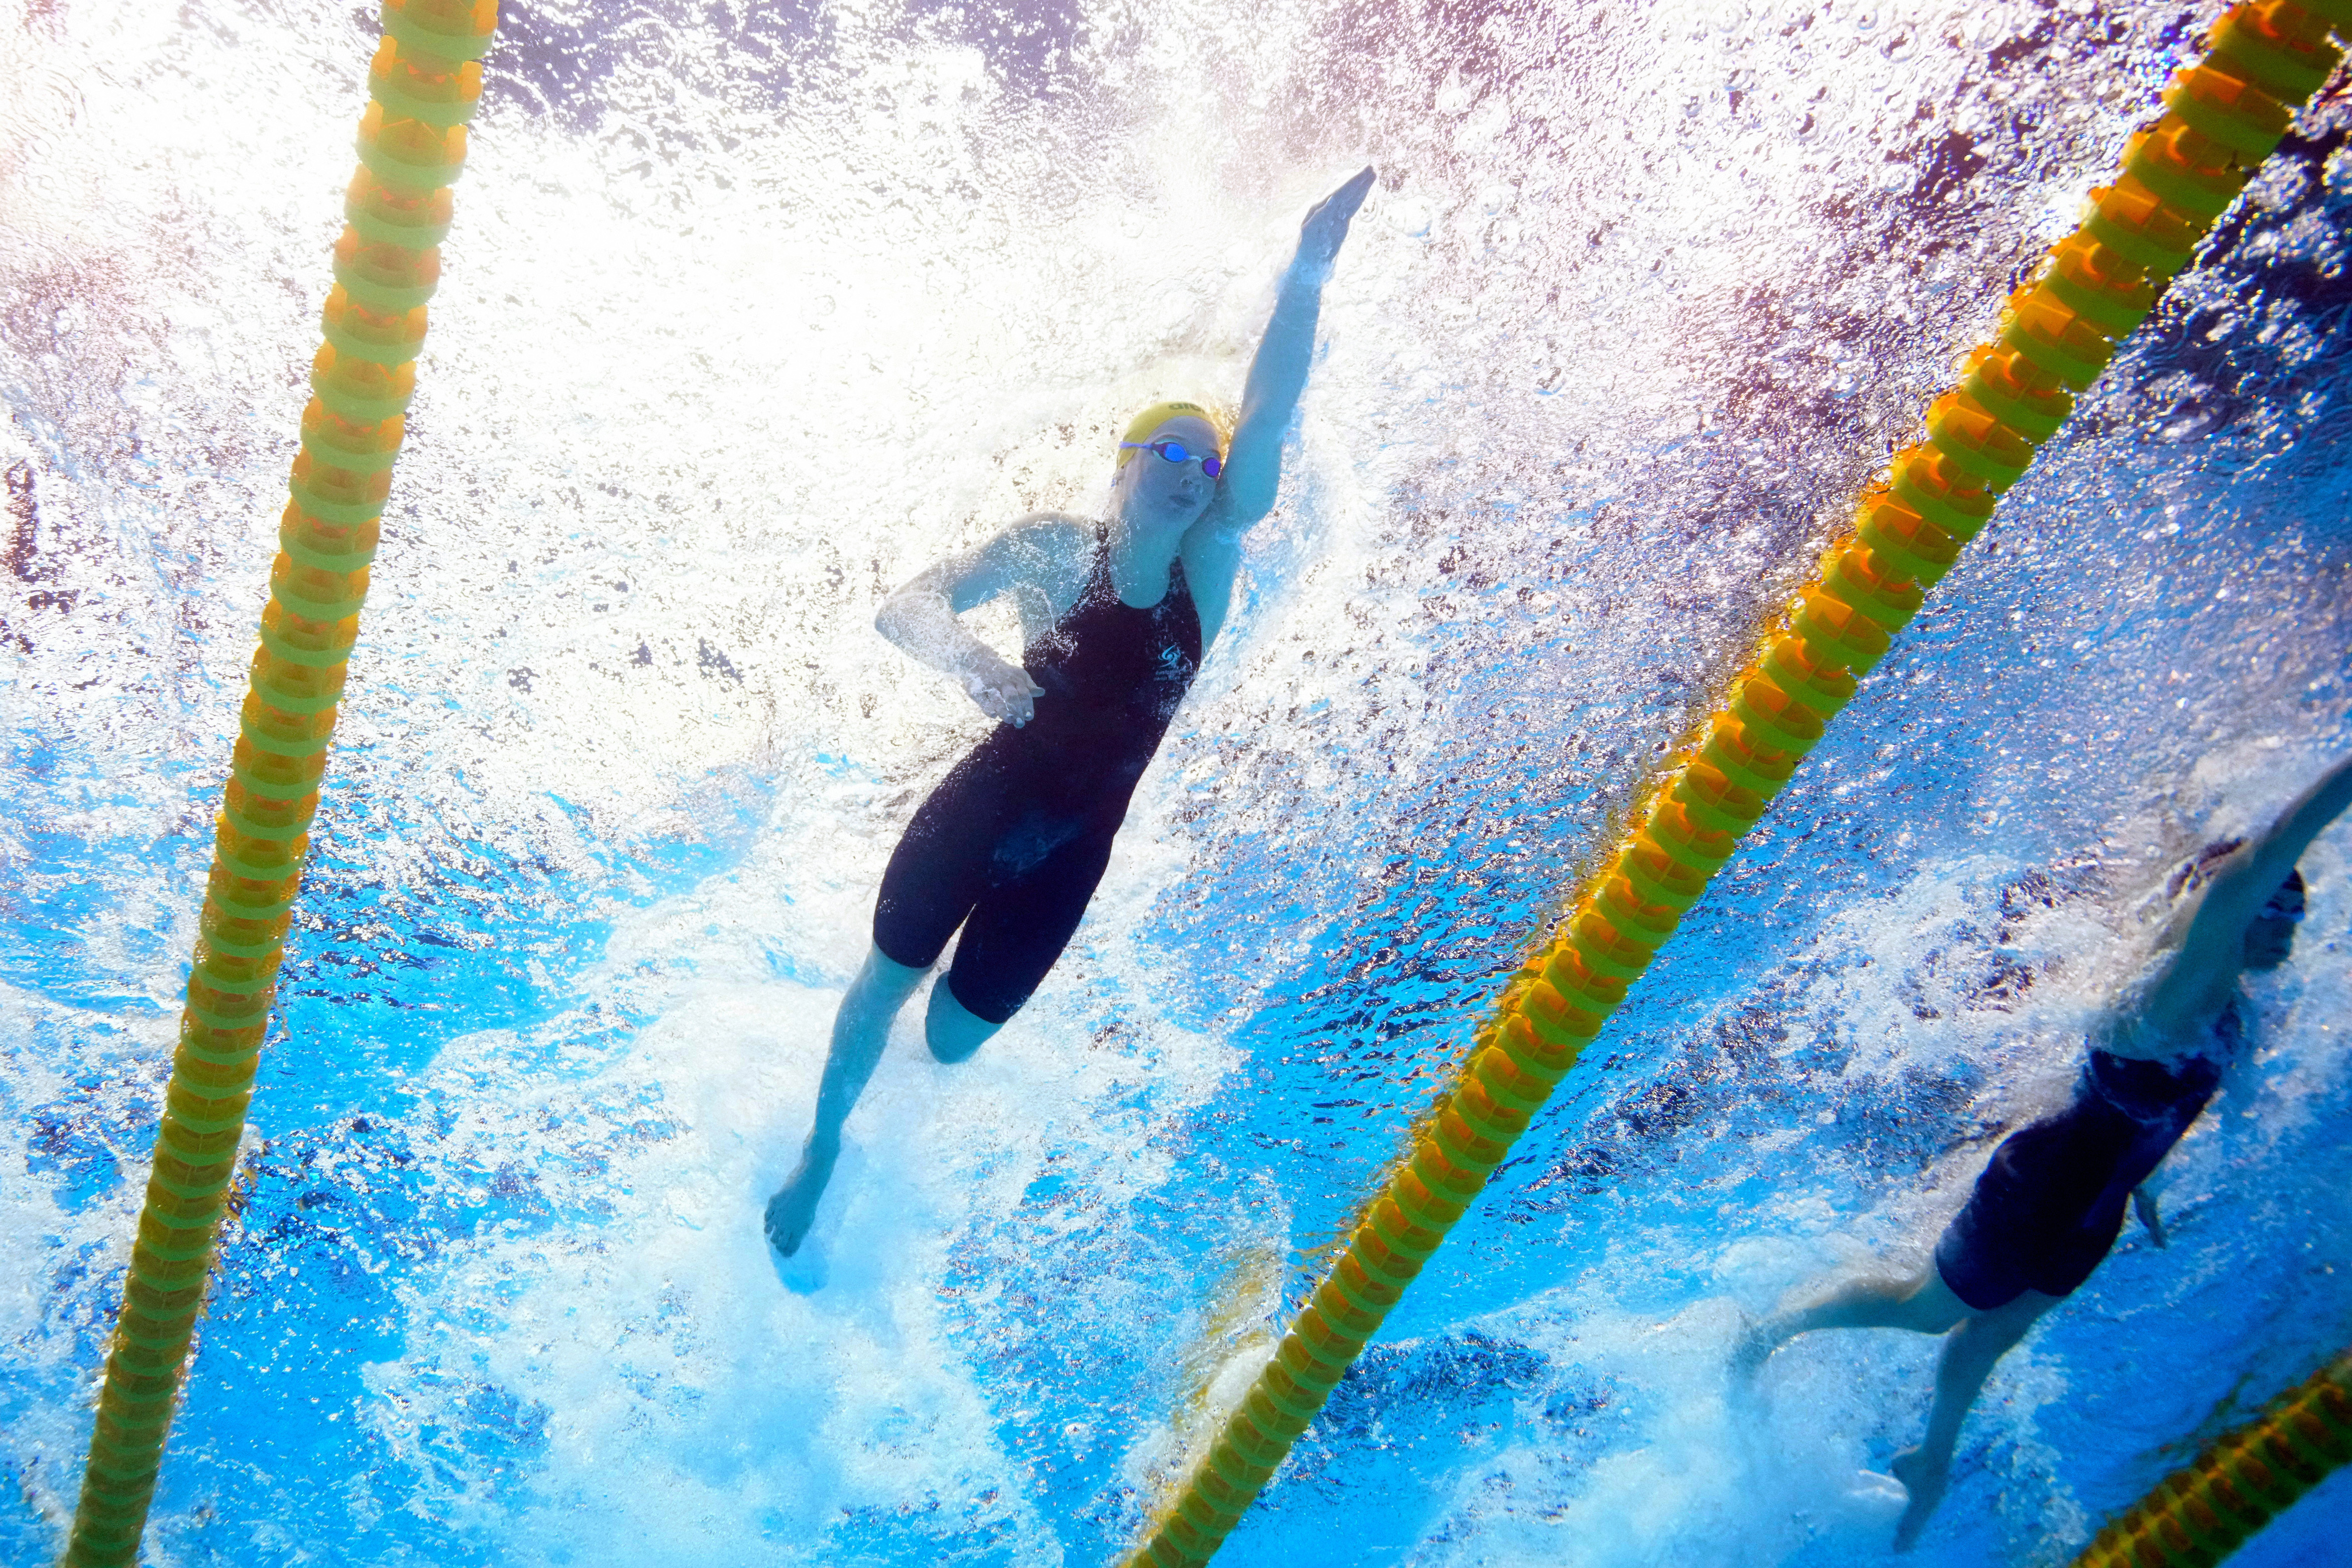 Australian swimmer Mollie O'Callaghan